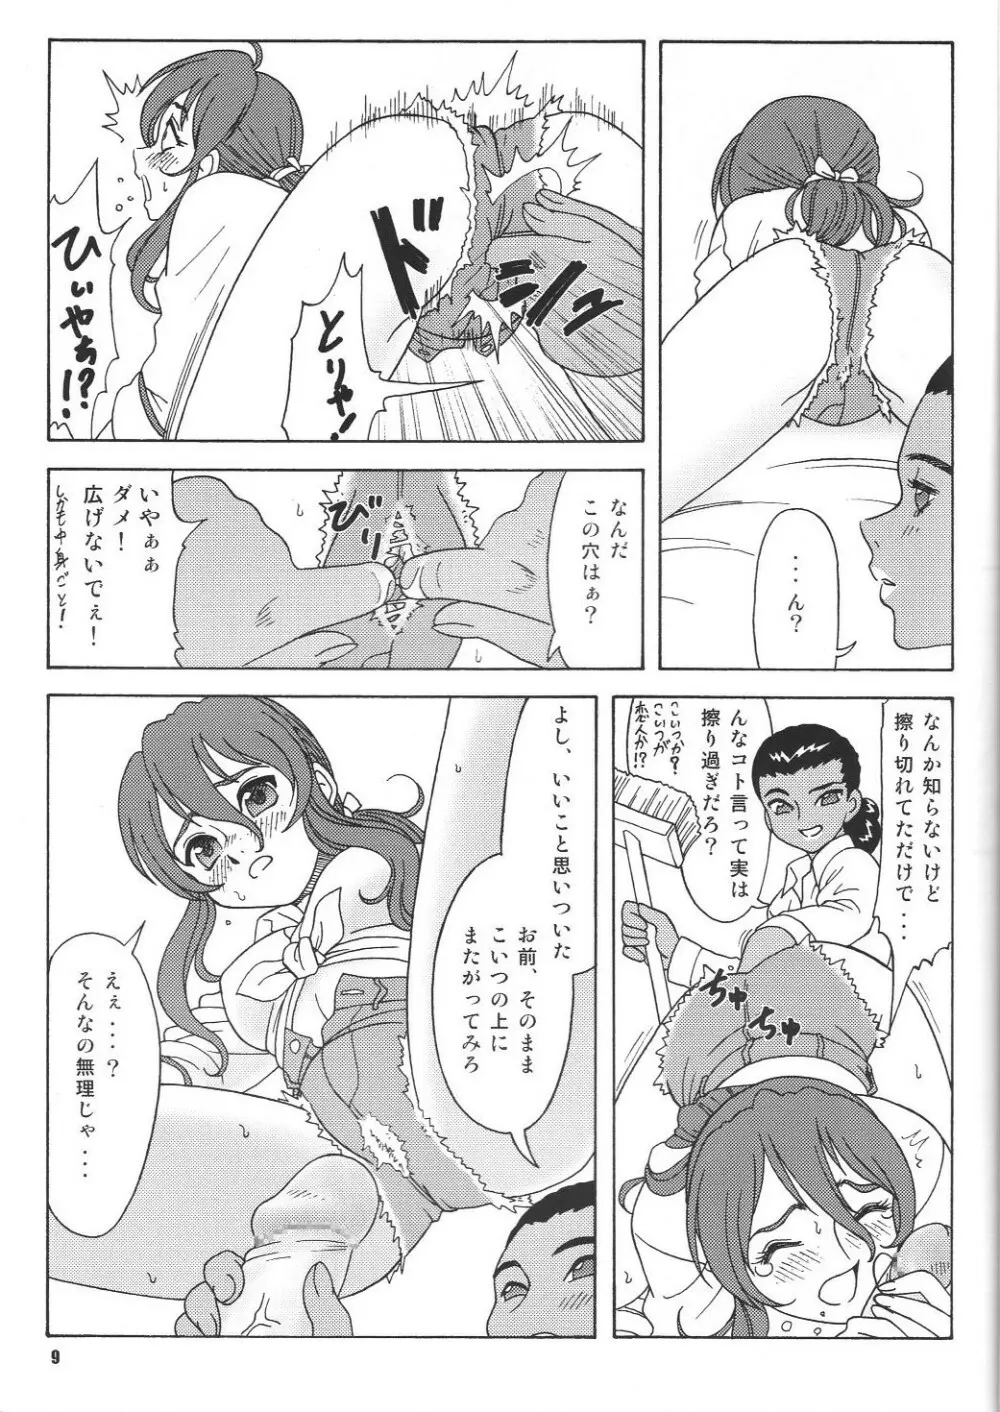 Fujishima Spirits vol.6 - page8